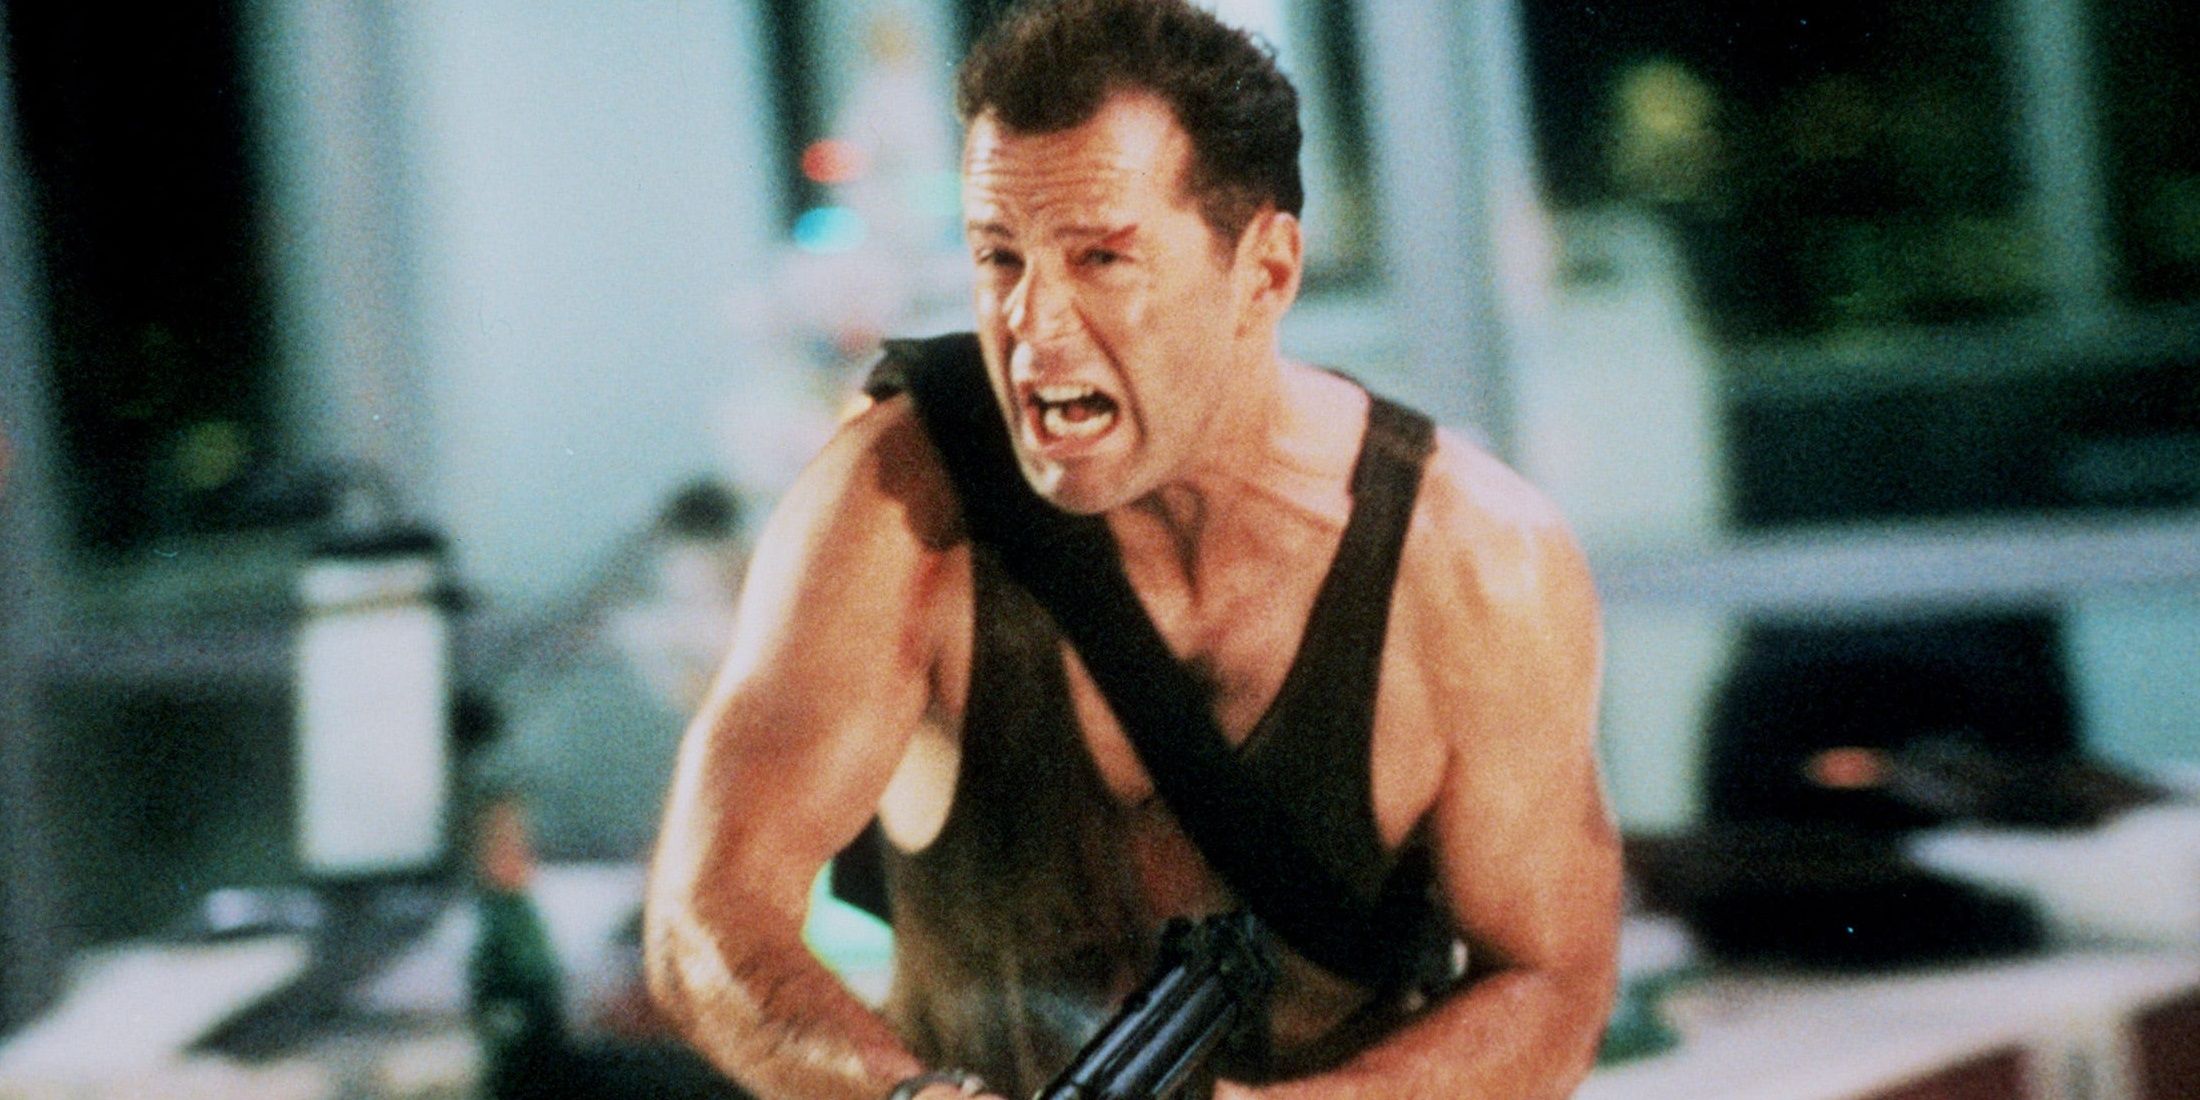 John McClane screaming with a gun in Die Hard